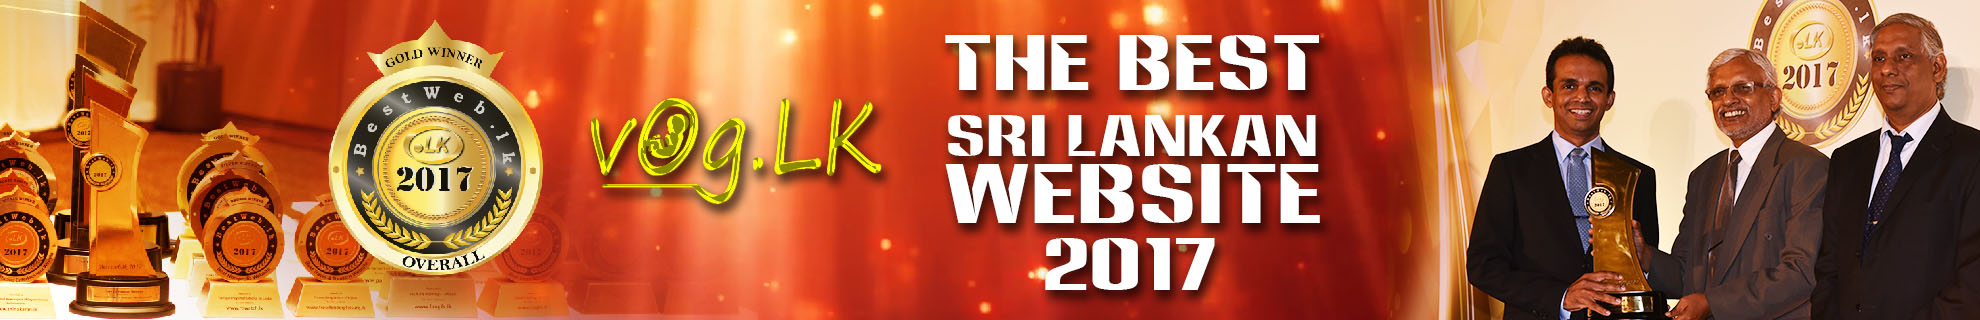 Best Sri Lankan Website